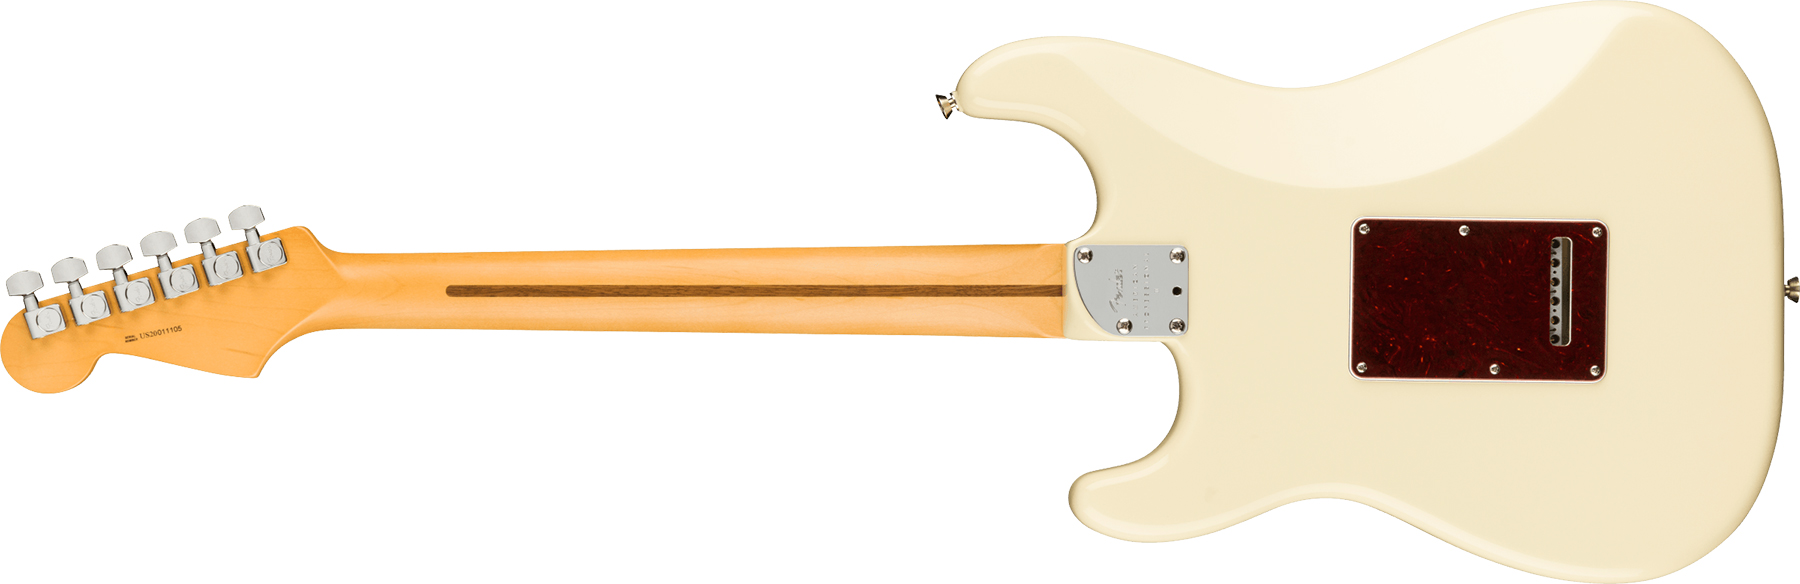 Fender Strat American Professional Ii Hss Usa Rw - Olympic White - Guitarra eléctrica con forma de str. - Variation 1